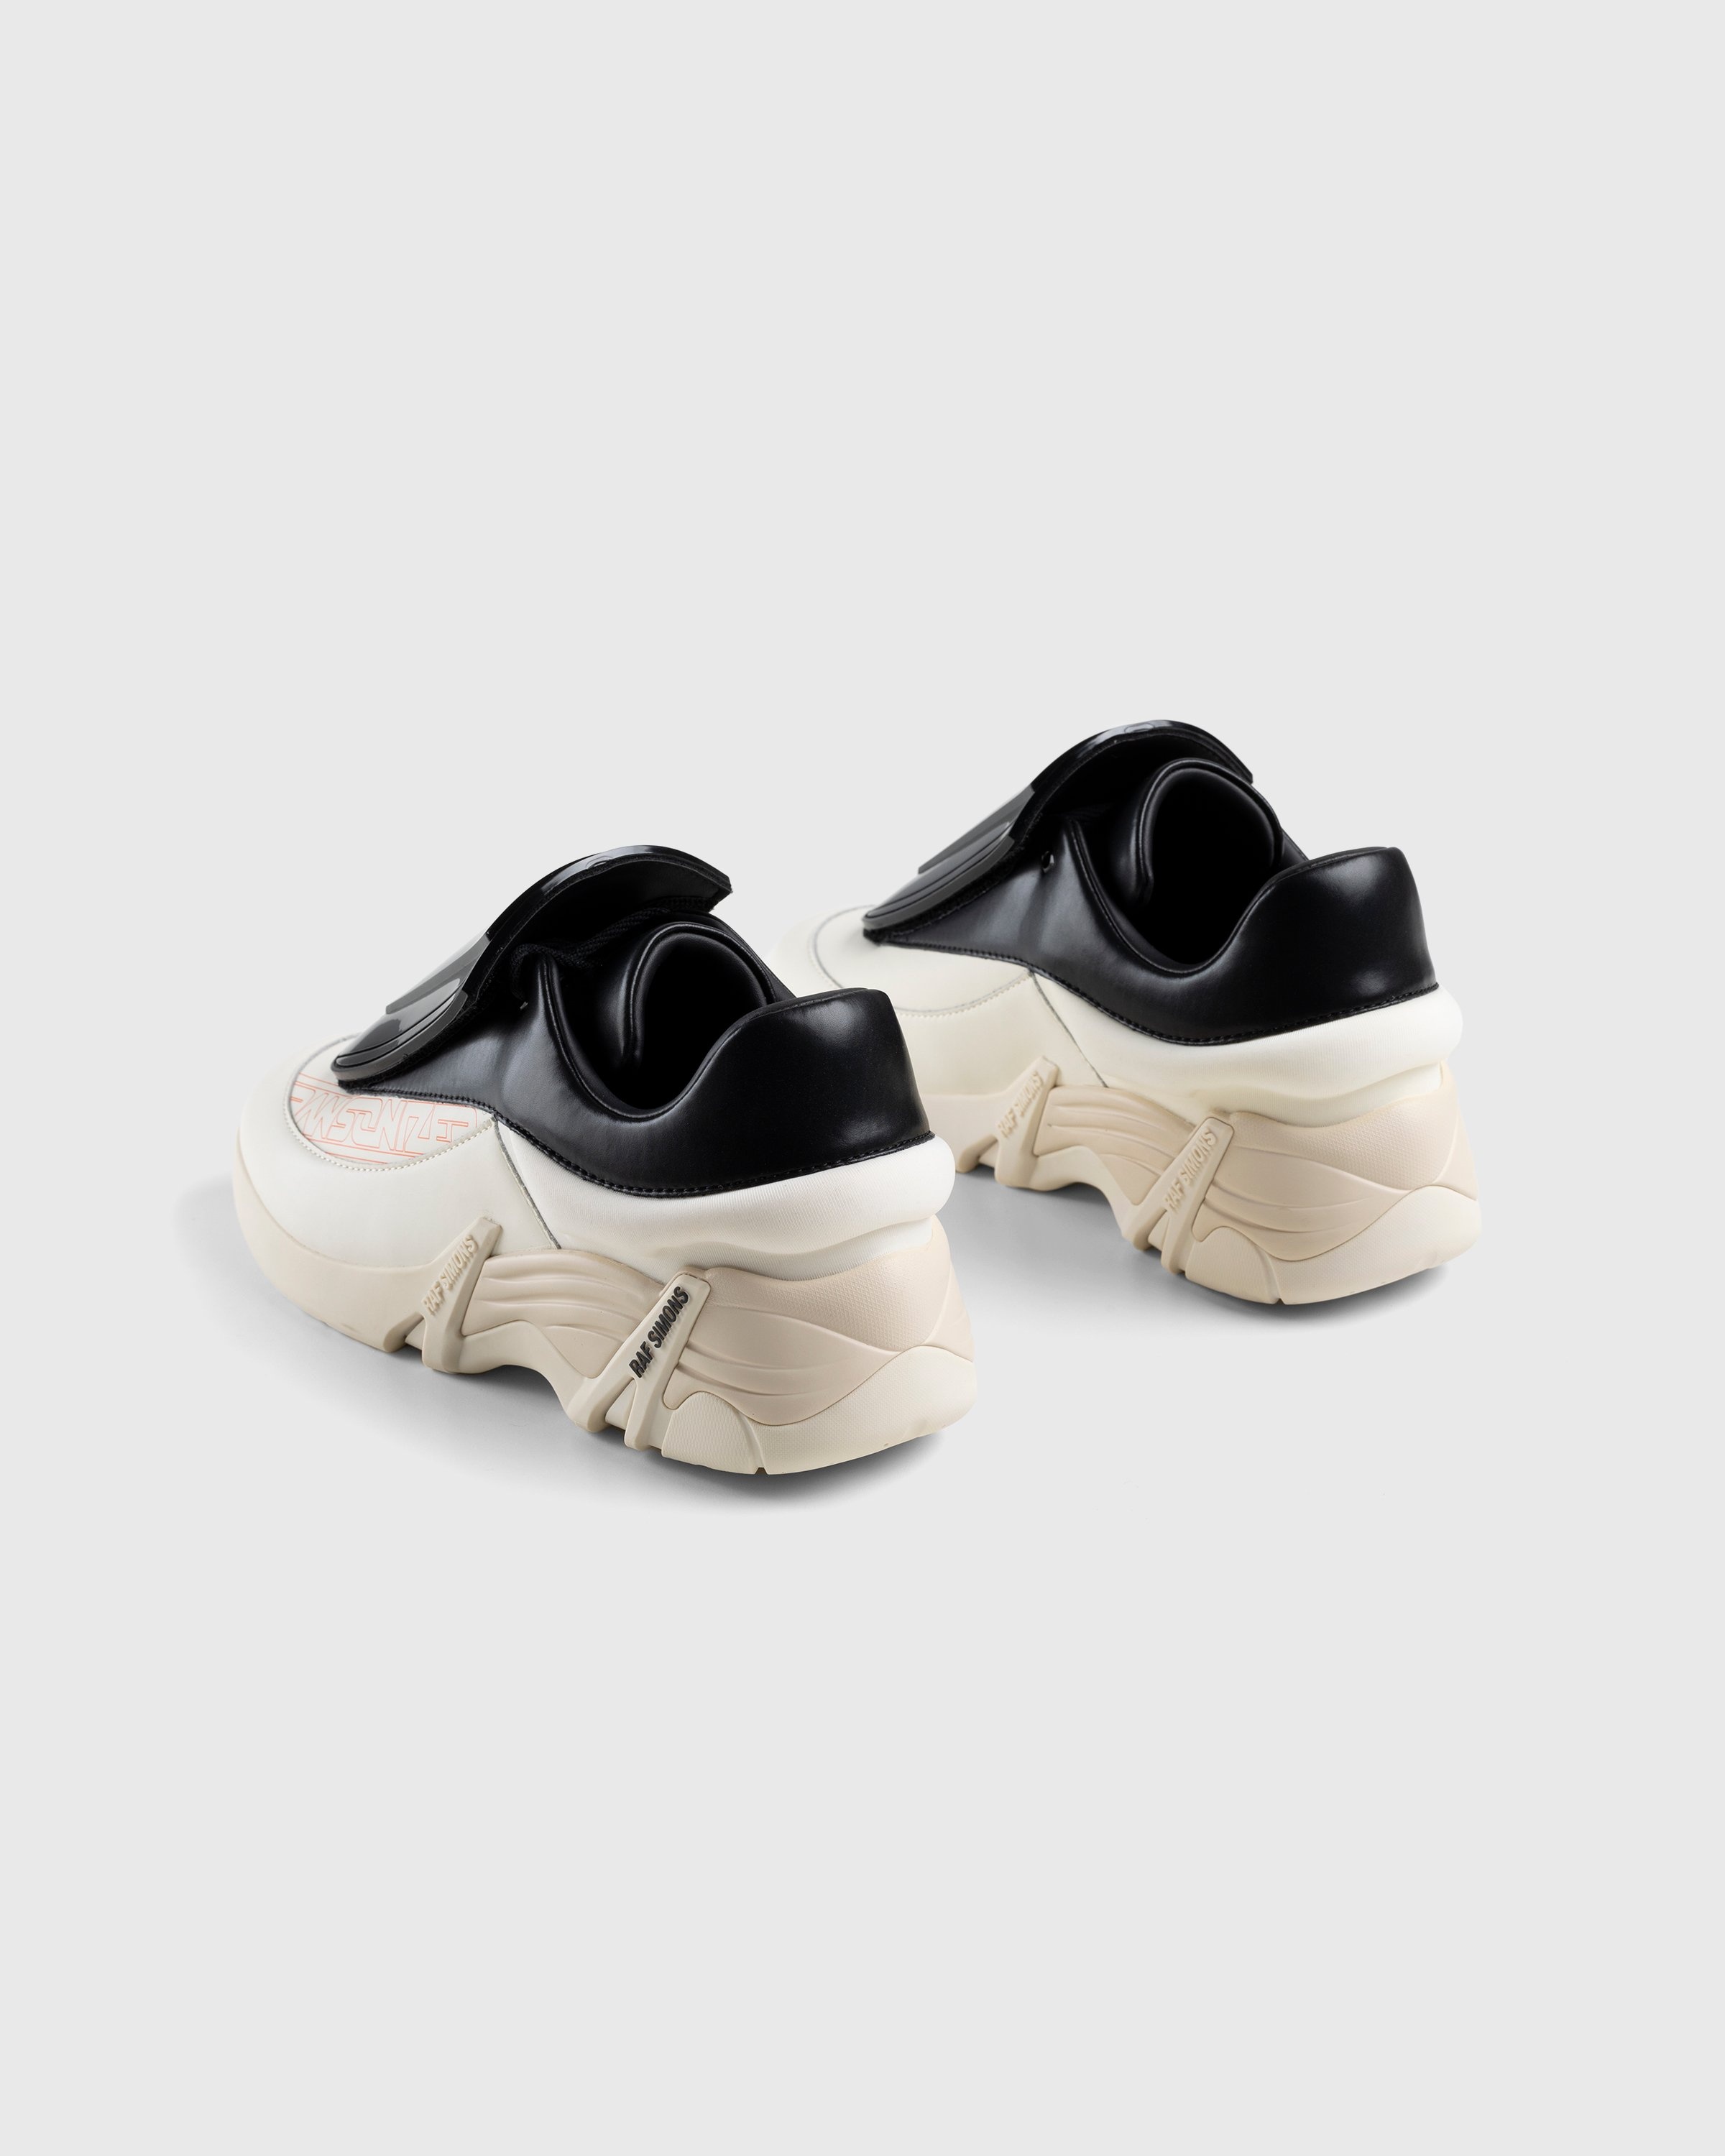 Raf Simons – Antei Black/White/Cream - Low Top Sneakers - Beige - Image 4